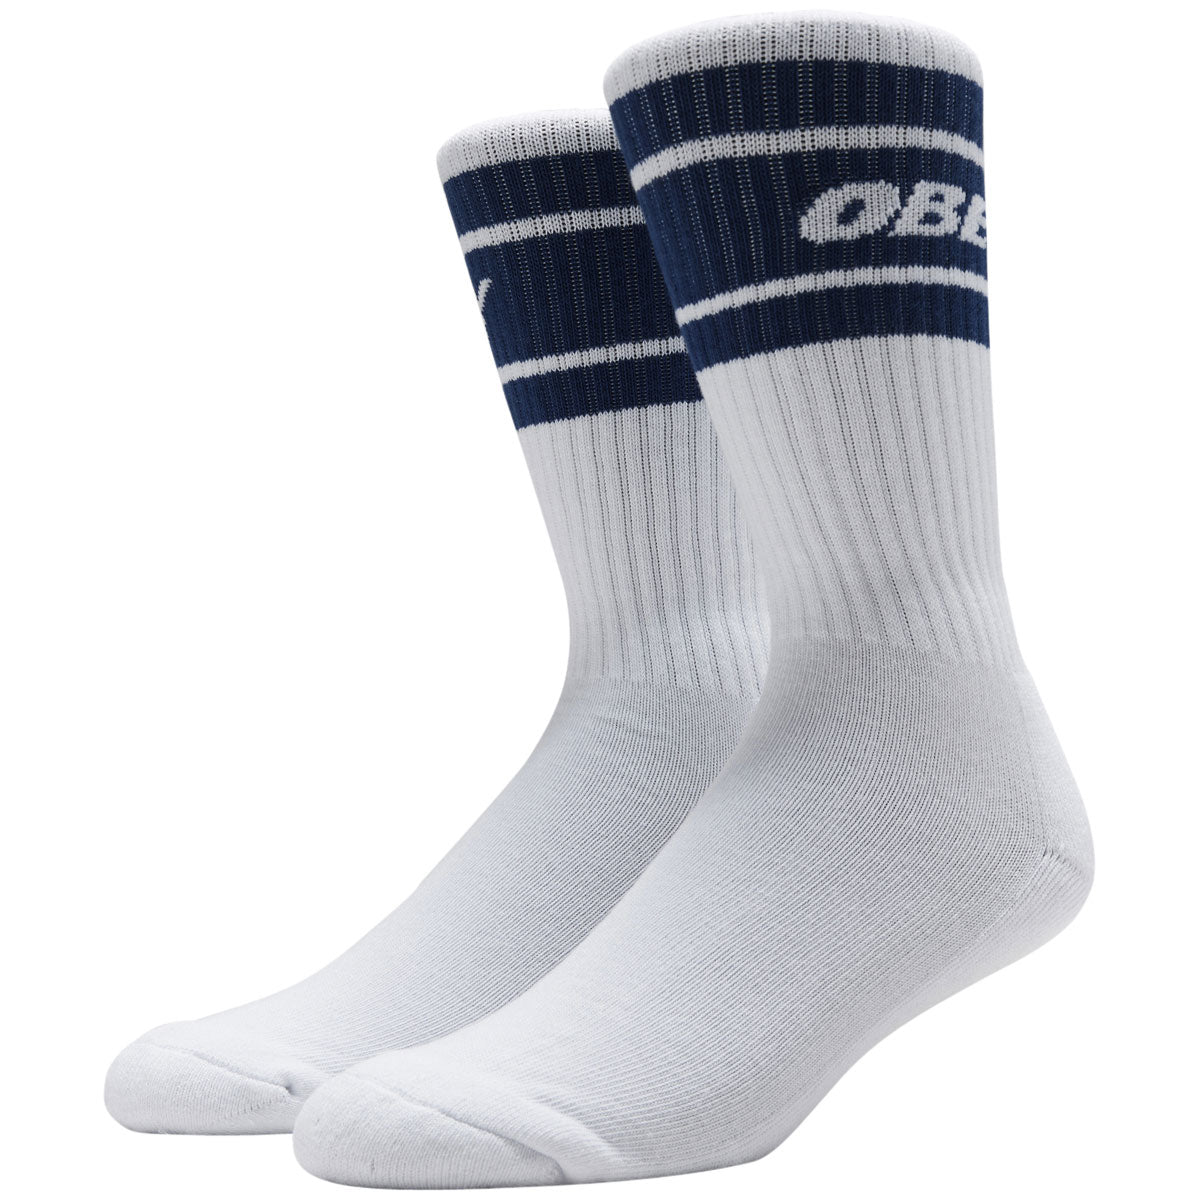 Obey Cooper Ii Socks - White/Surf Blue image 1